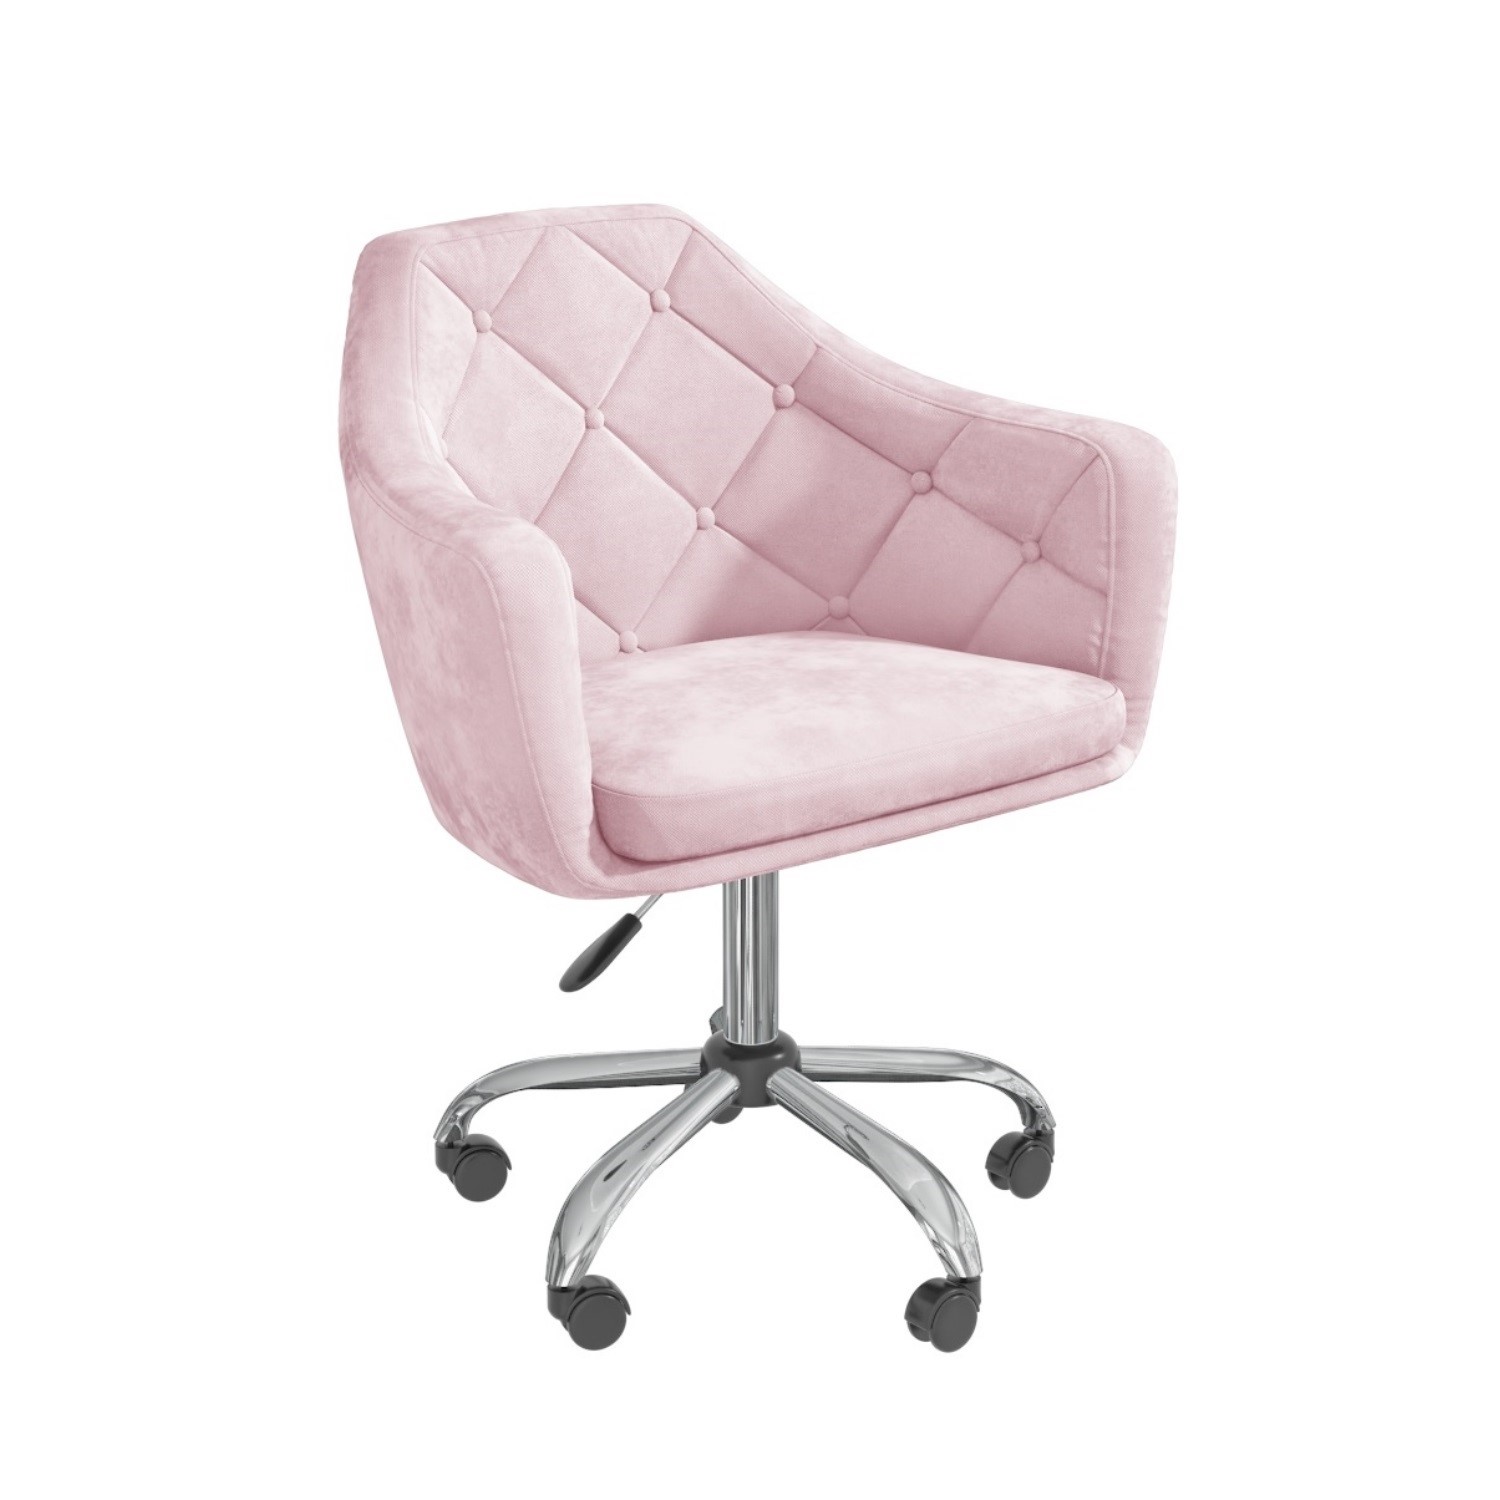 Photo of Pink velvet chesterfield swivel office chair - marley